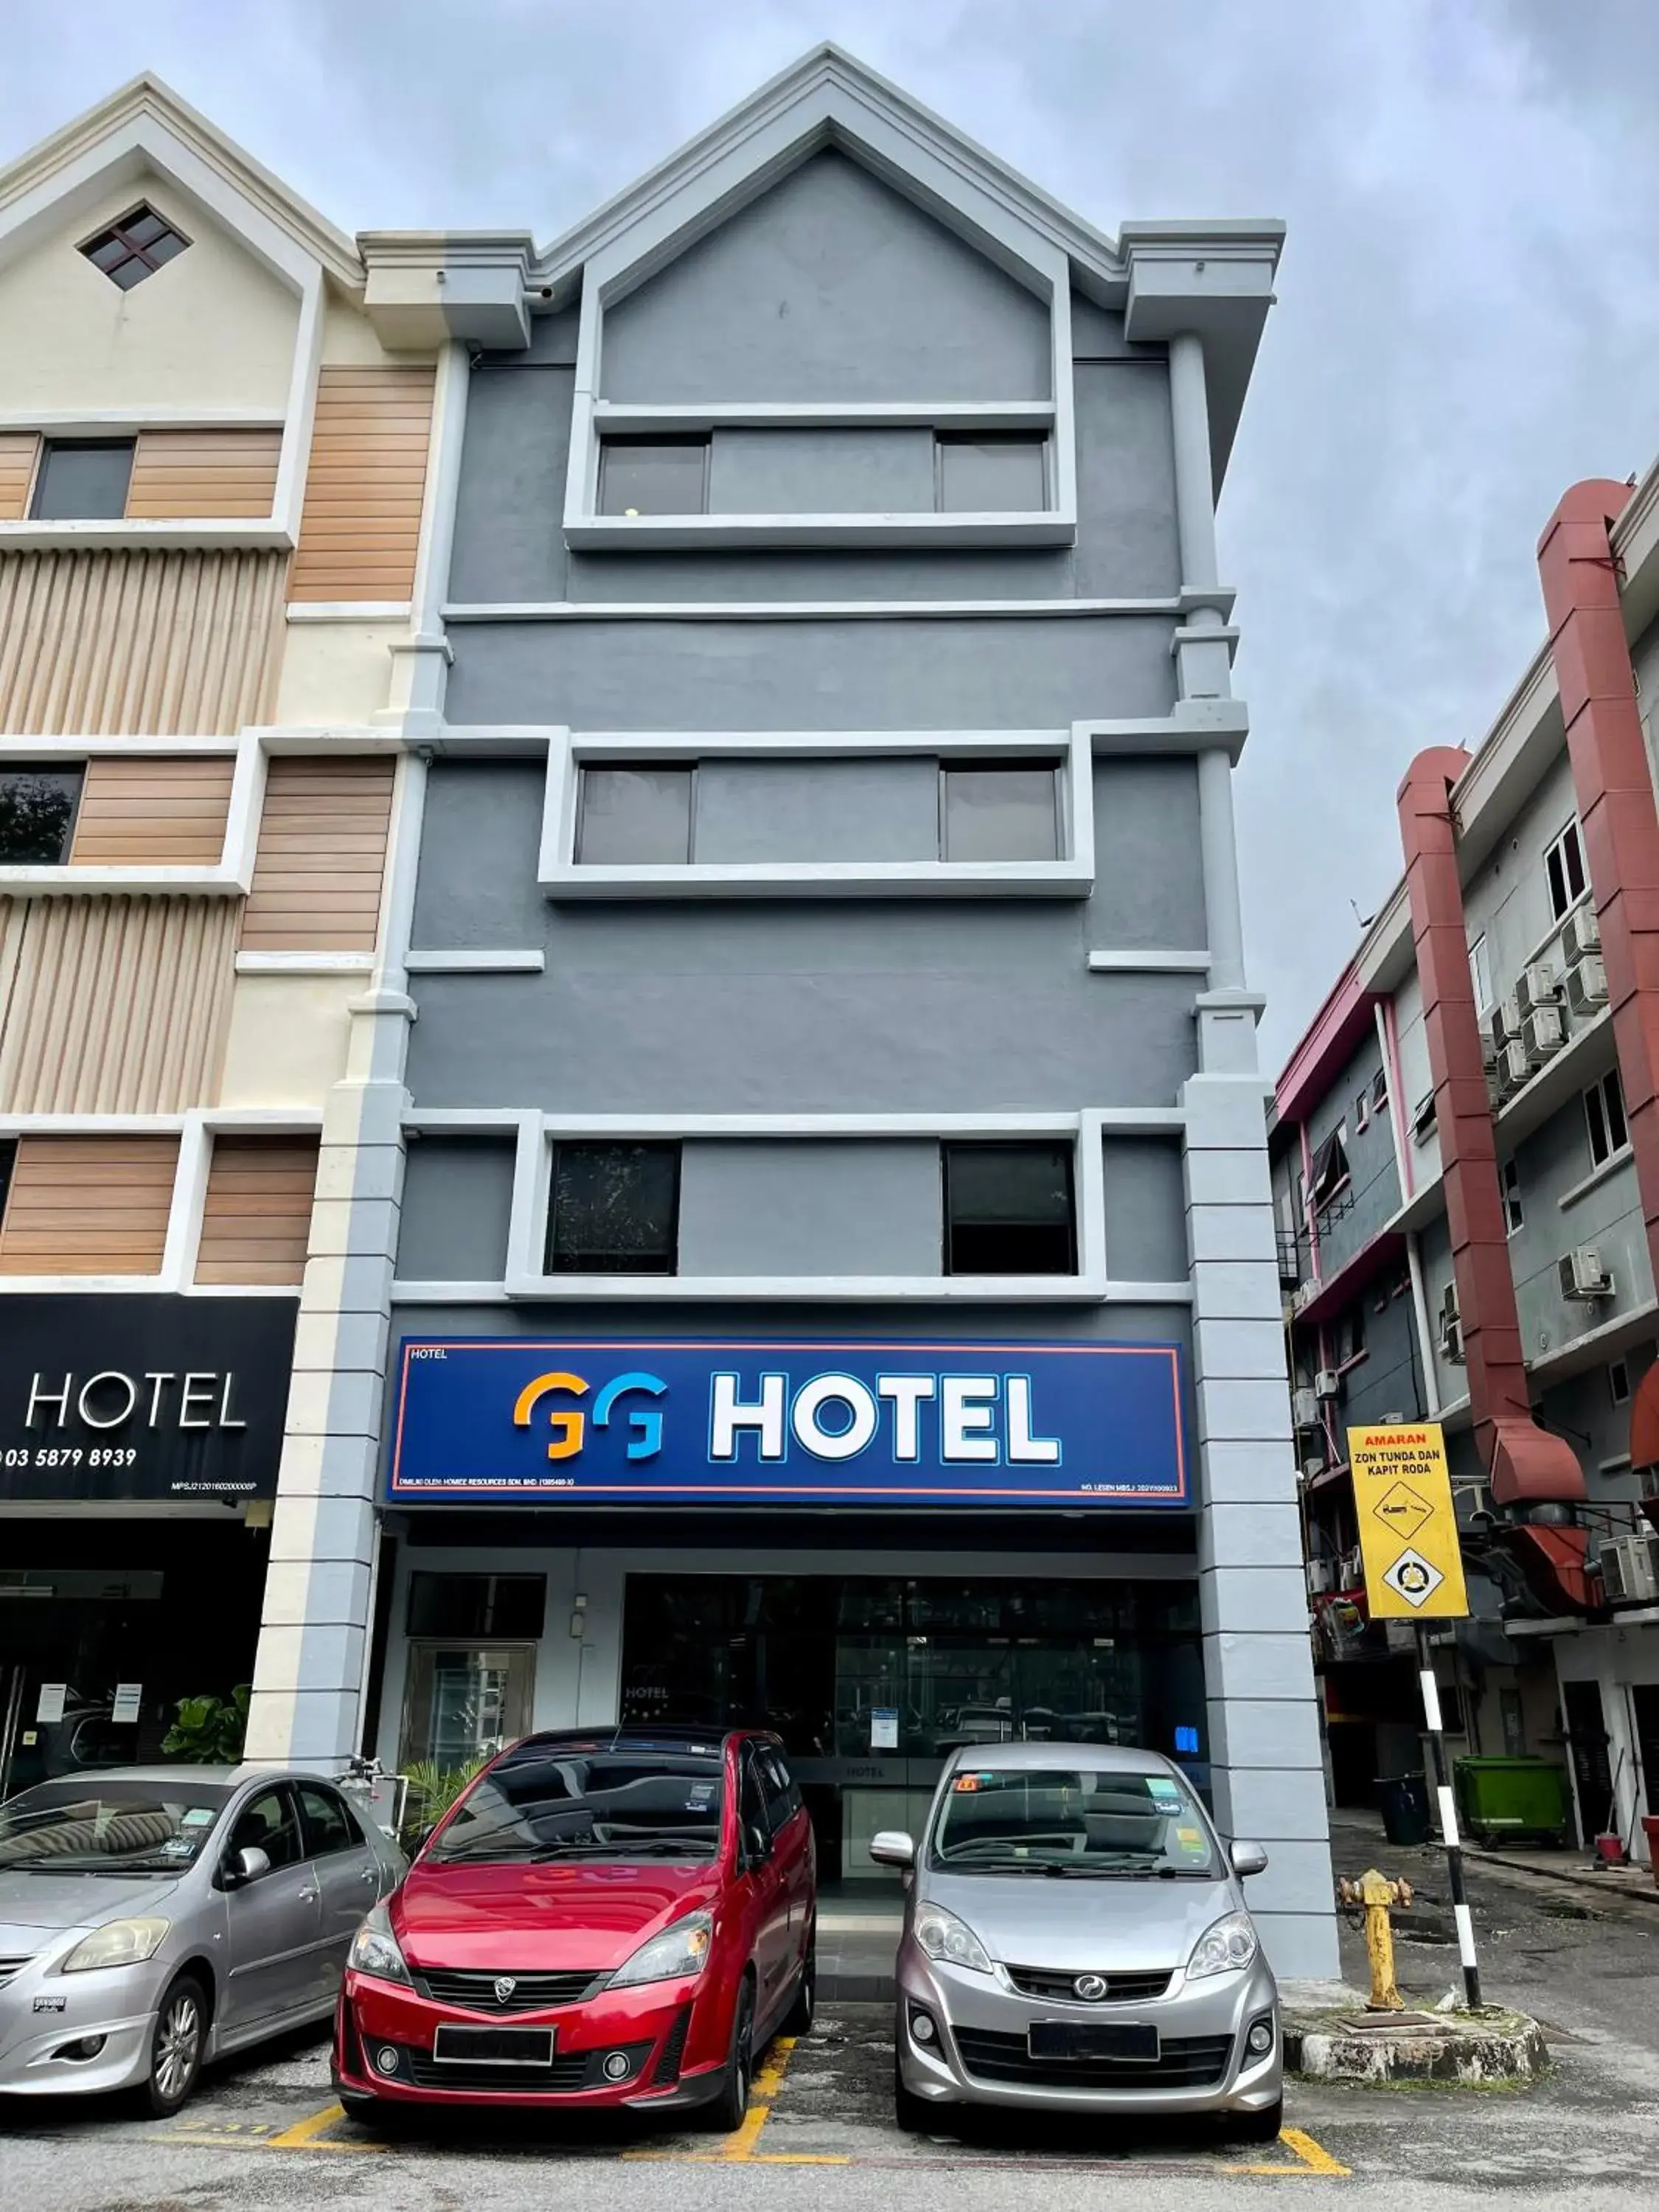 Property Building in GG Hotel Bandar Sunway